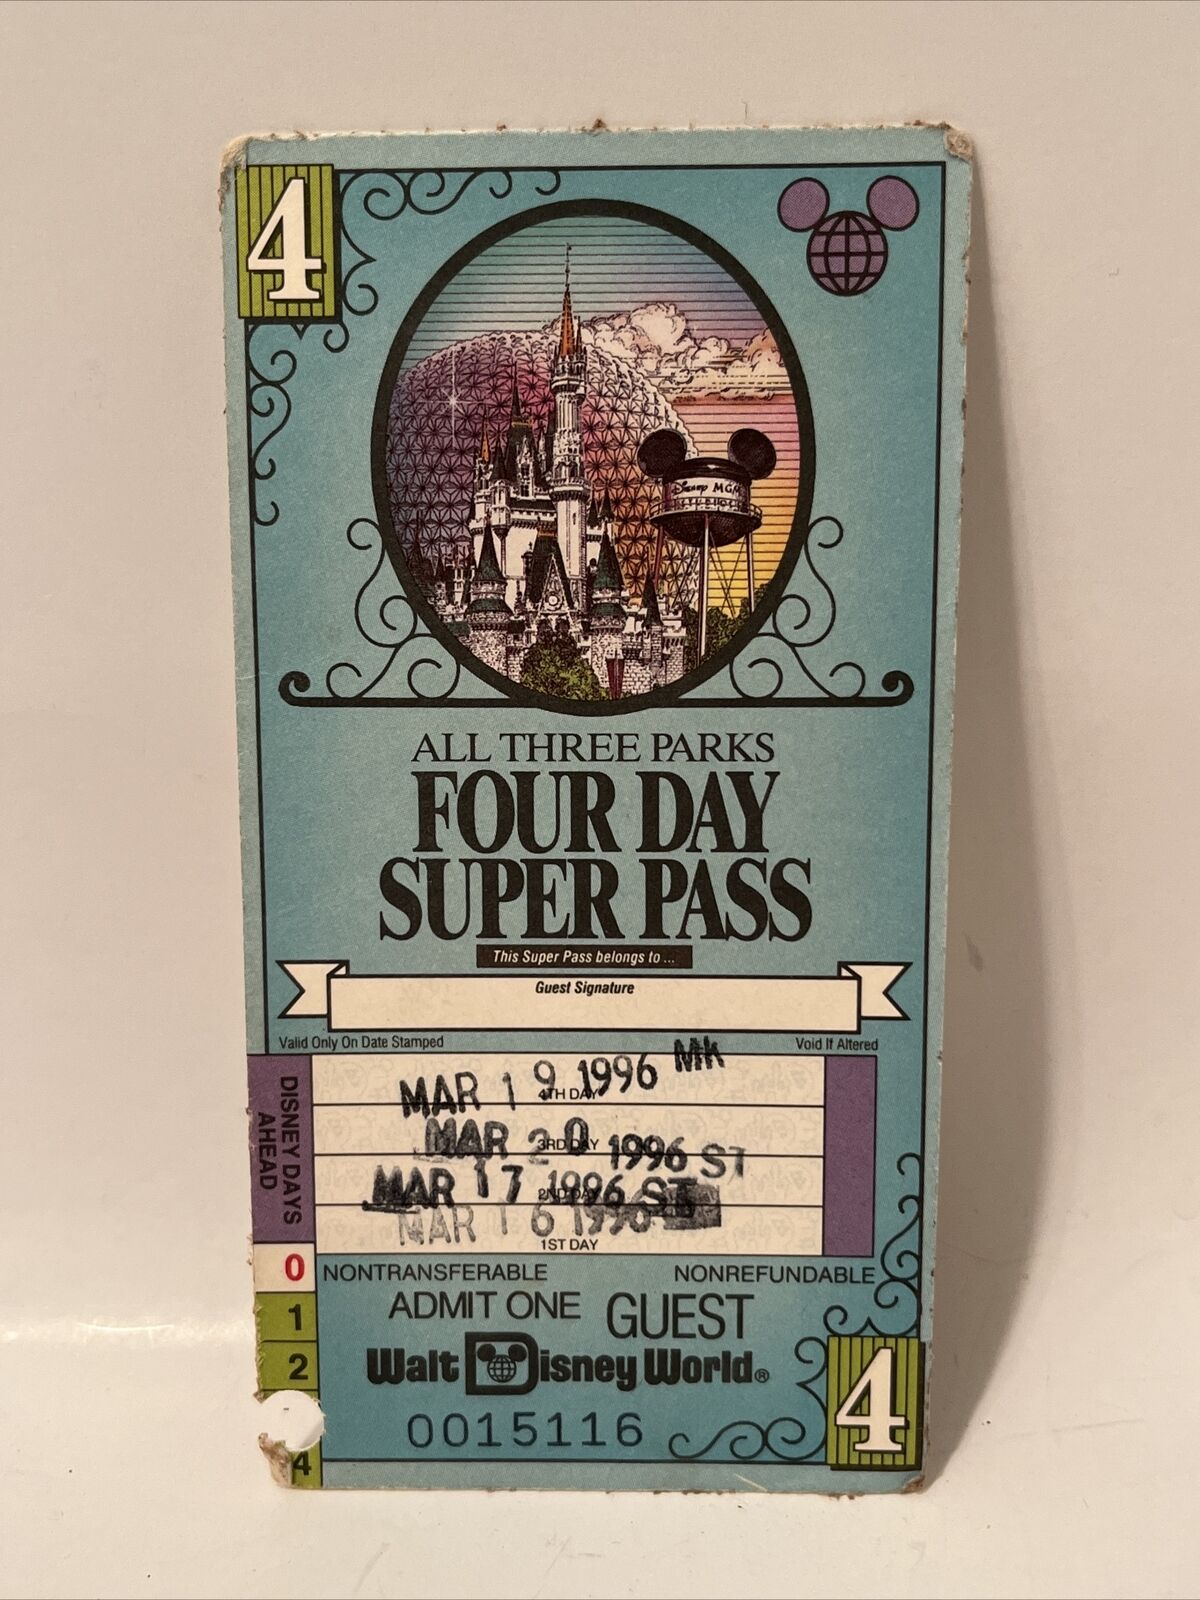 Walt Disney World 4 Day Super Pass All Three Parks Rare Ticket Stub 1996 Vintage